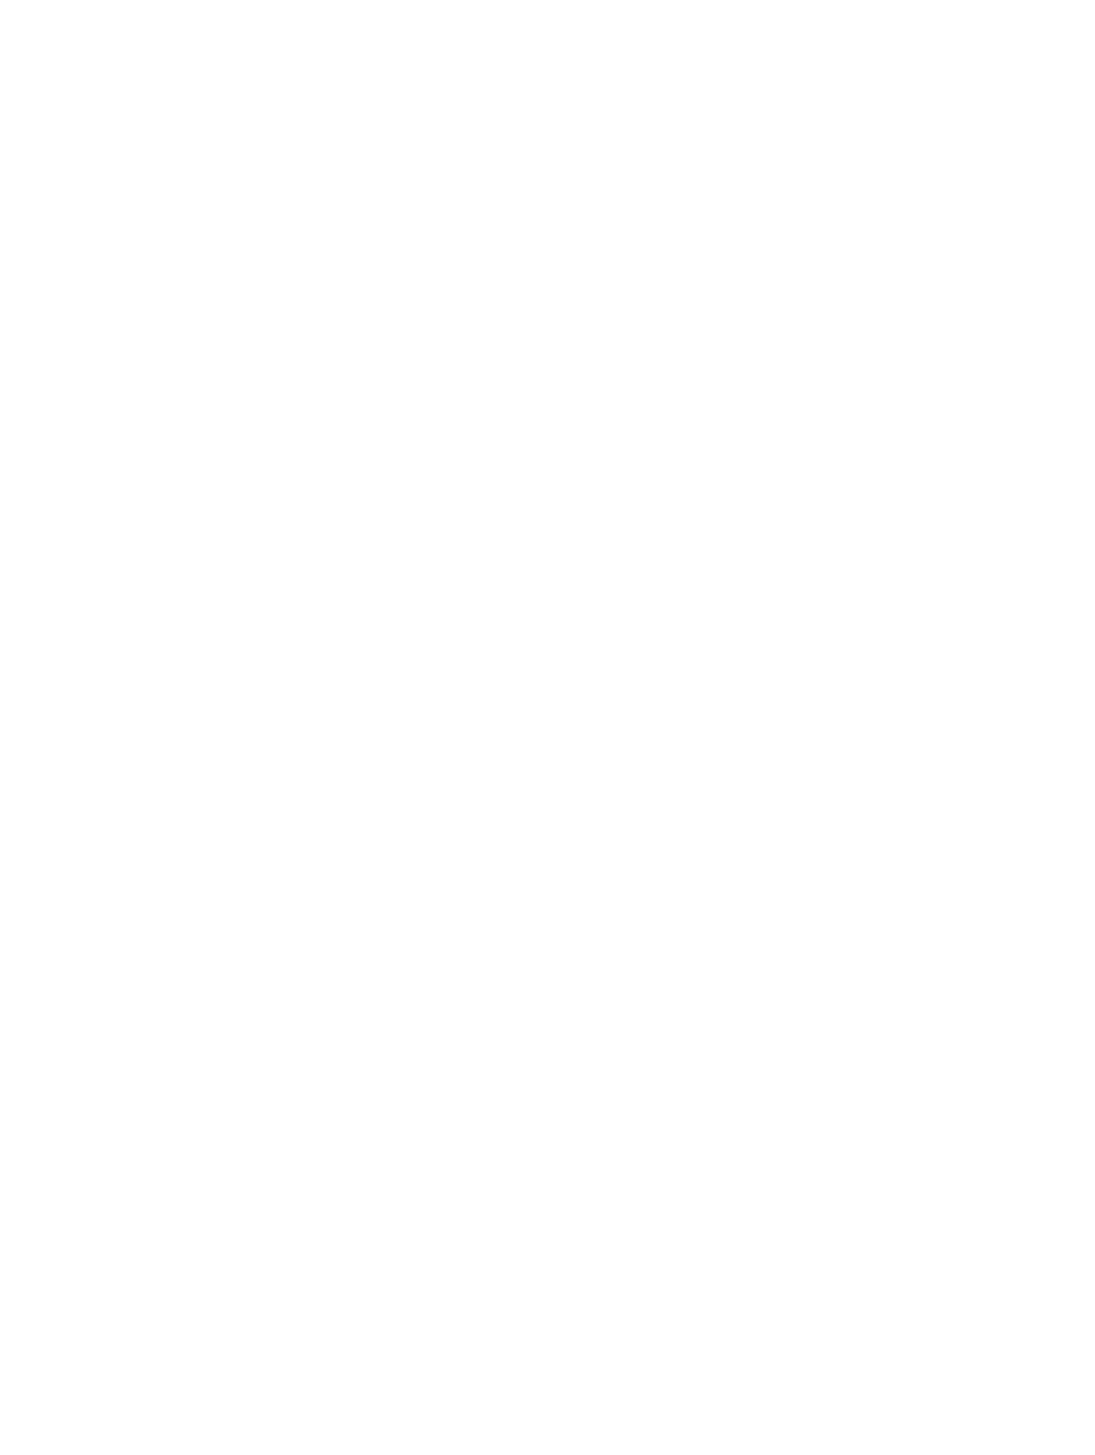 mach machinery